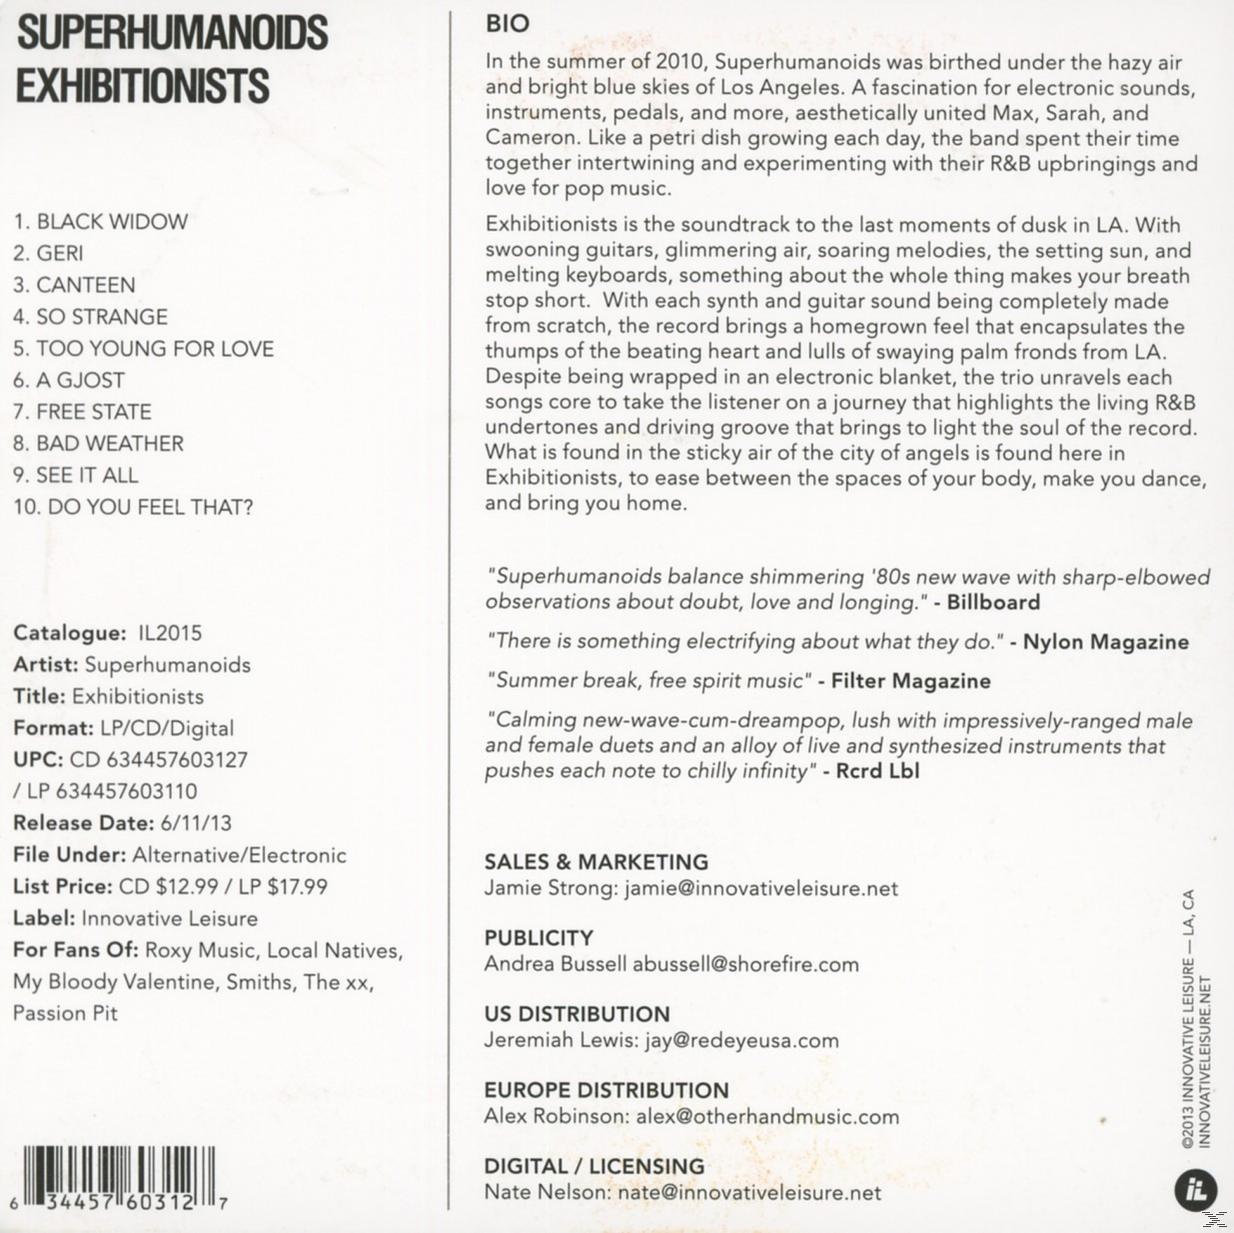 Exhibitionists - (CD) Superhumanoids -